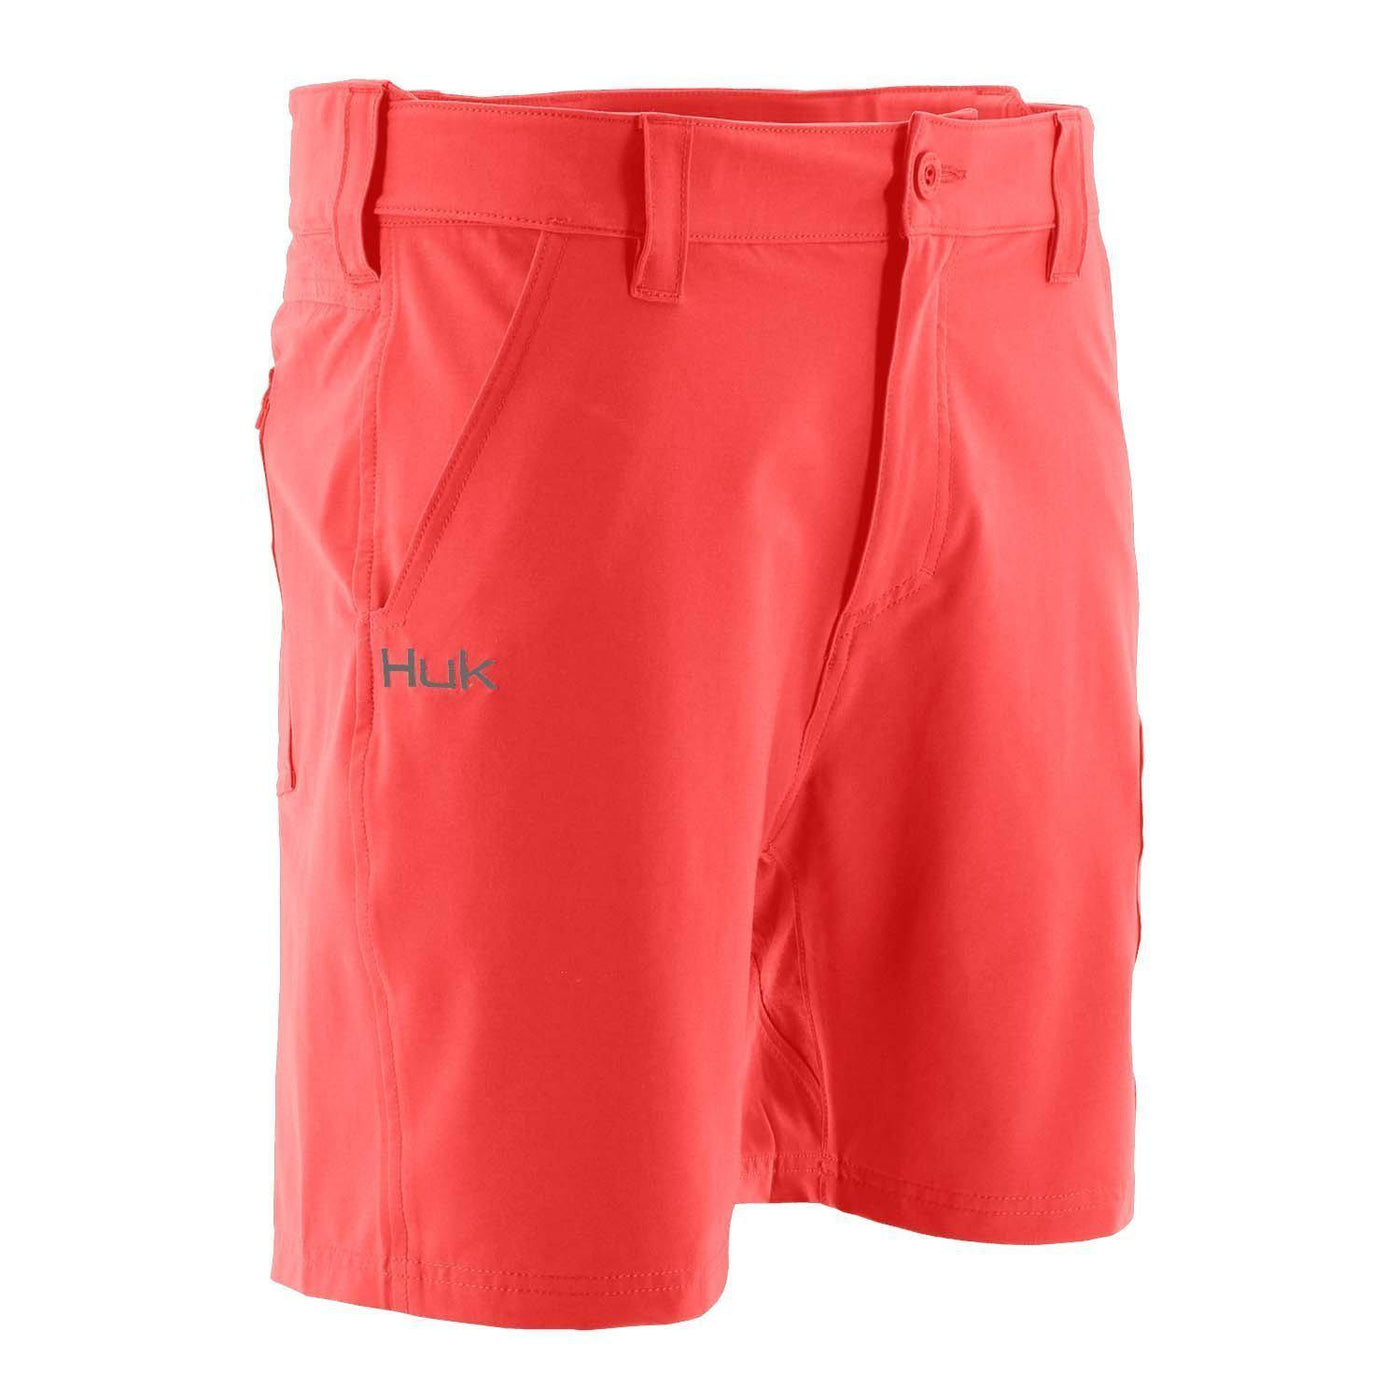 HUK Next Level 10.5 Short  Fishing shorts, Performance shorts, Fishing  outfits